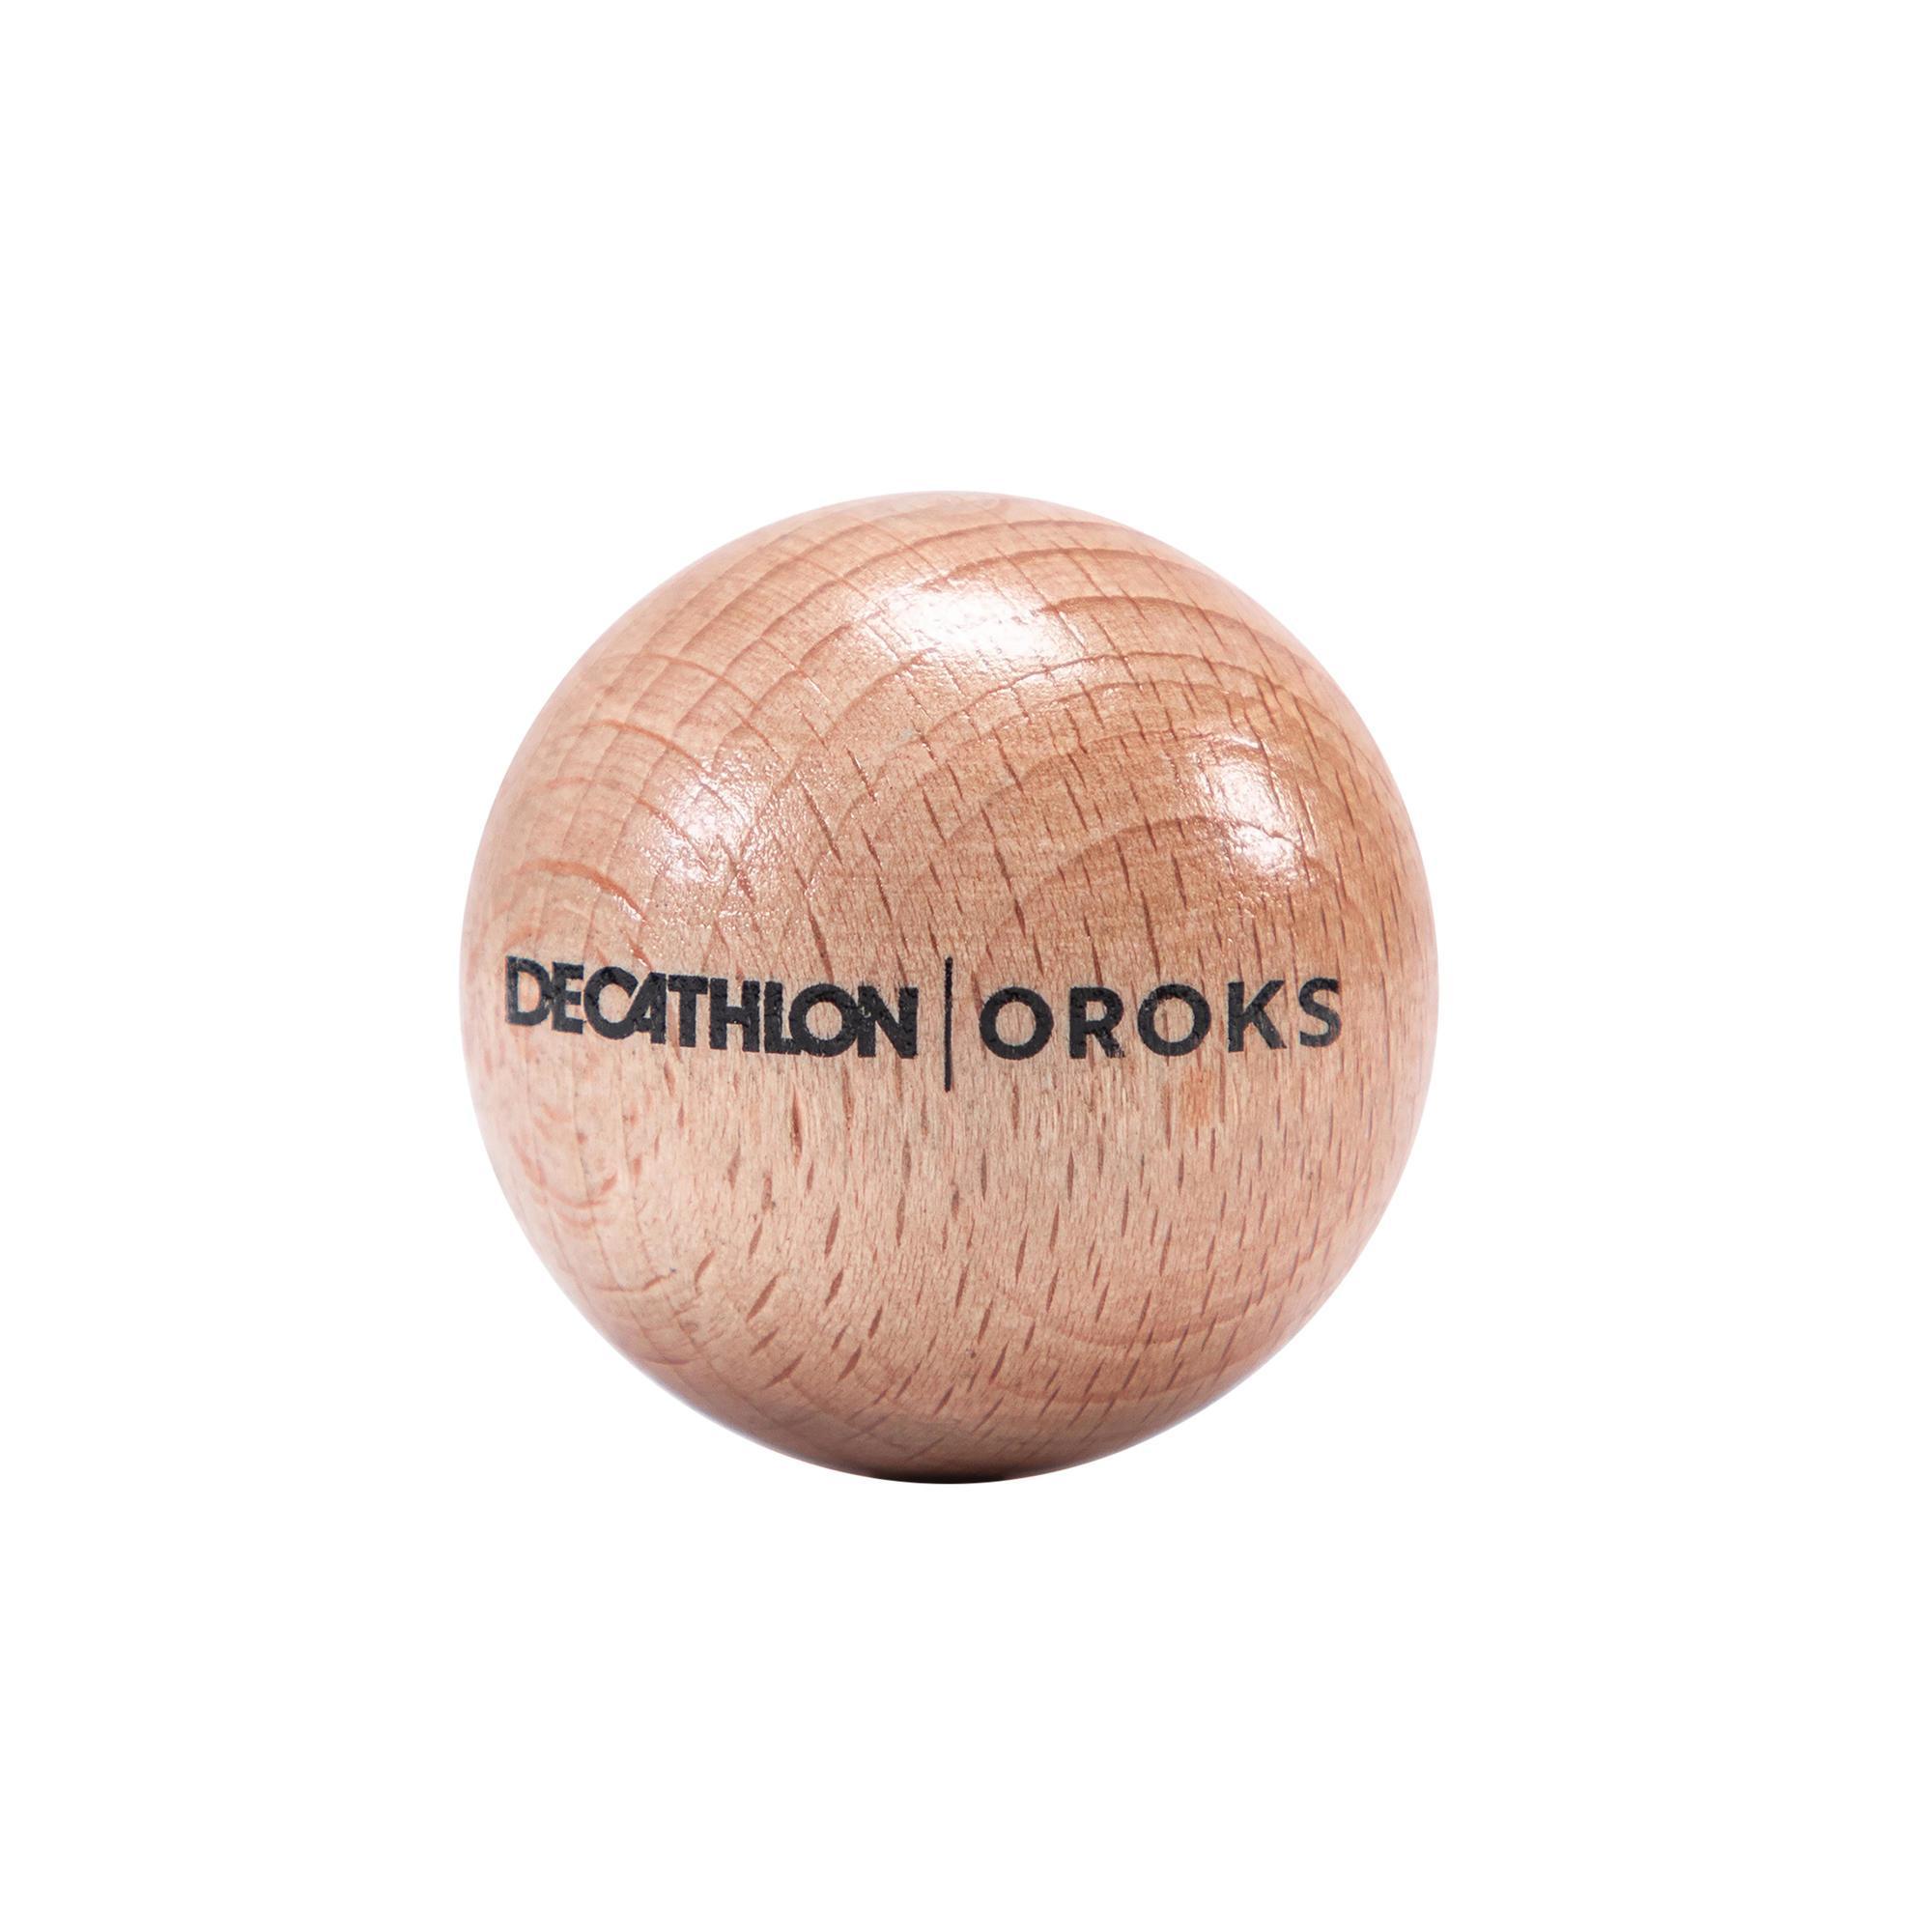 oroks decathlon